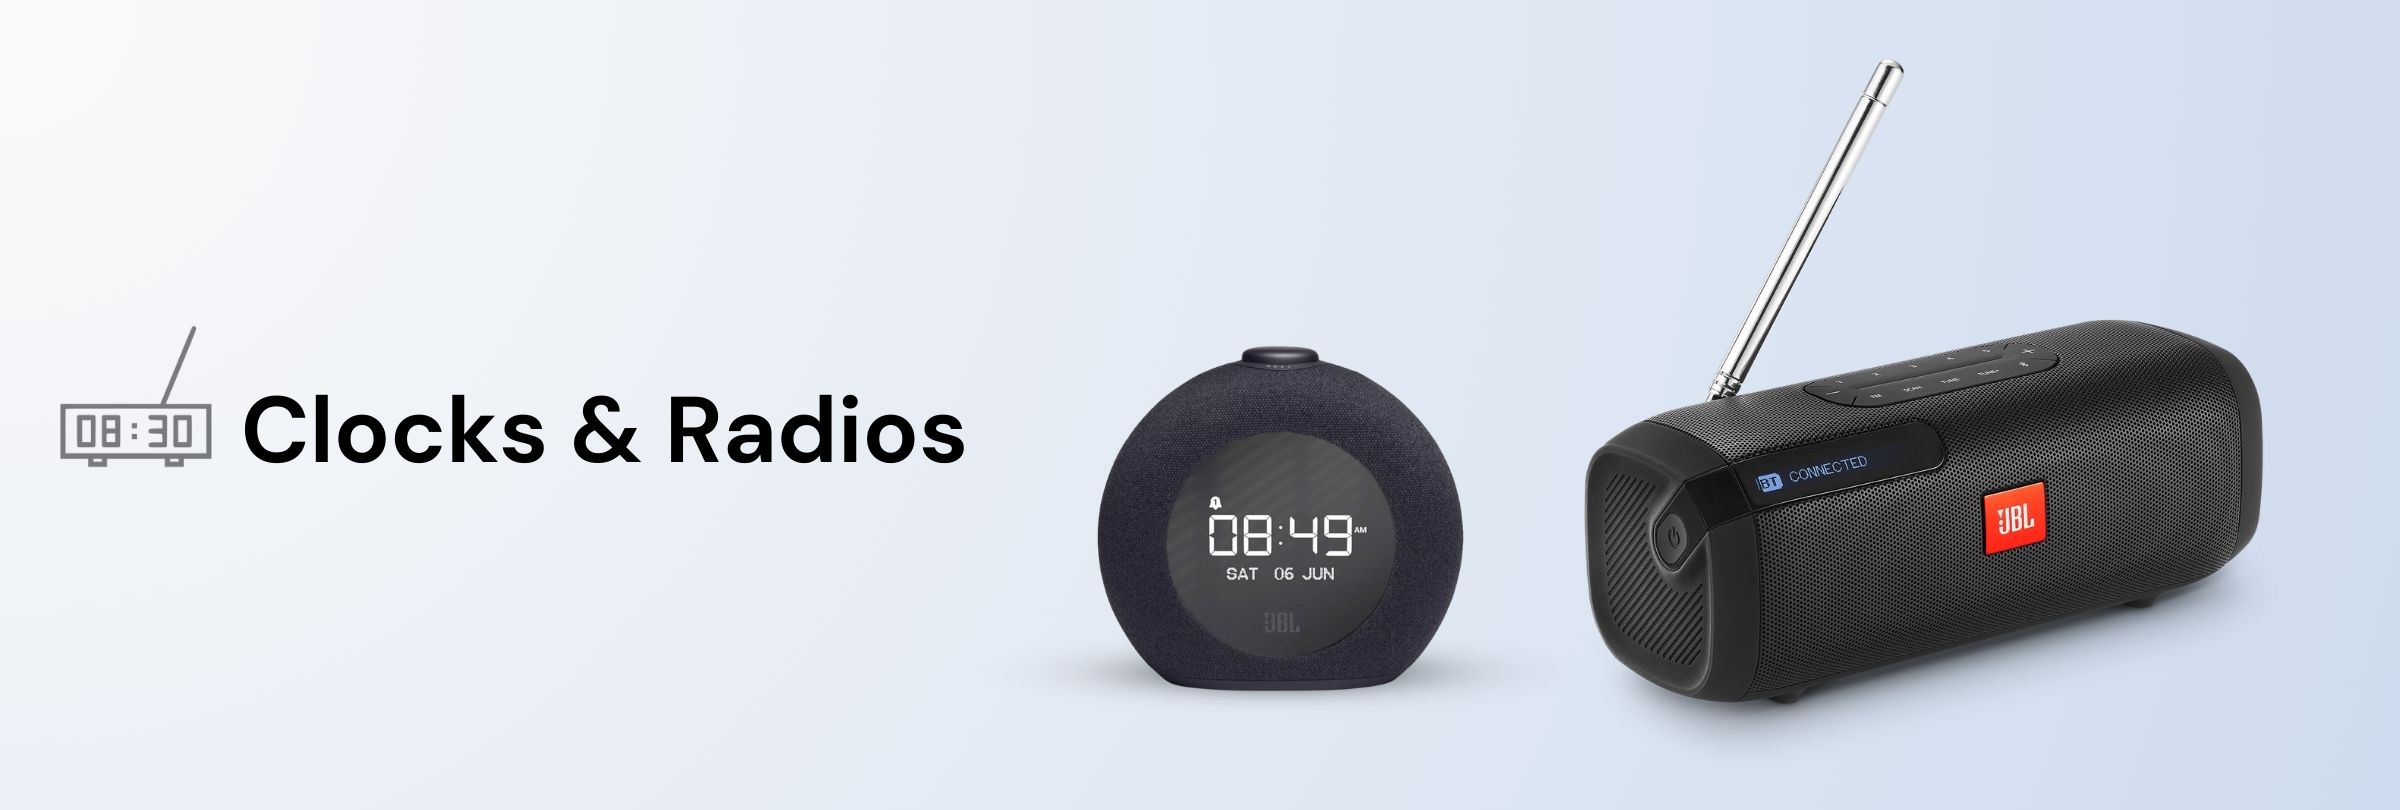 Clocks & Radios